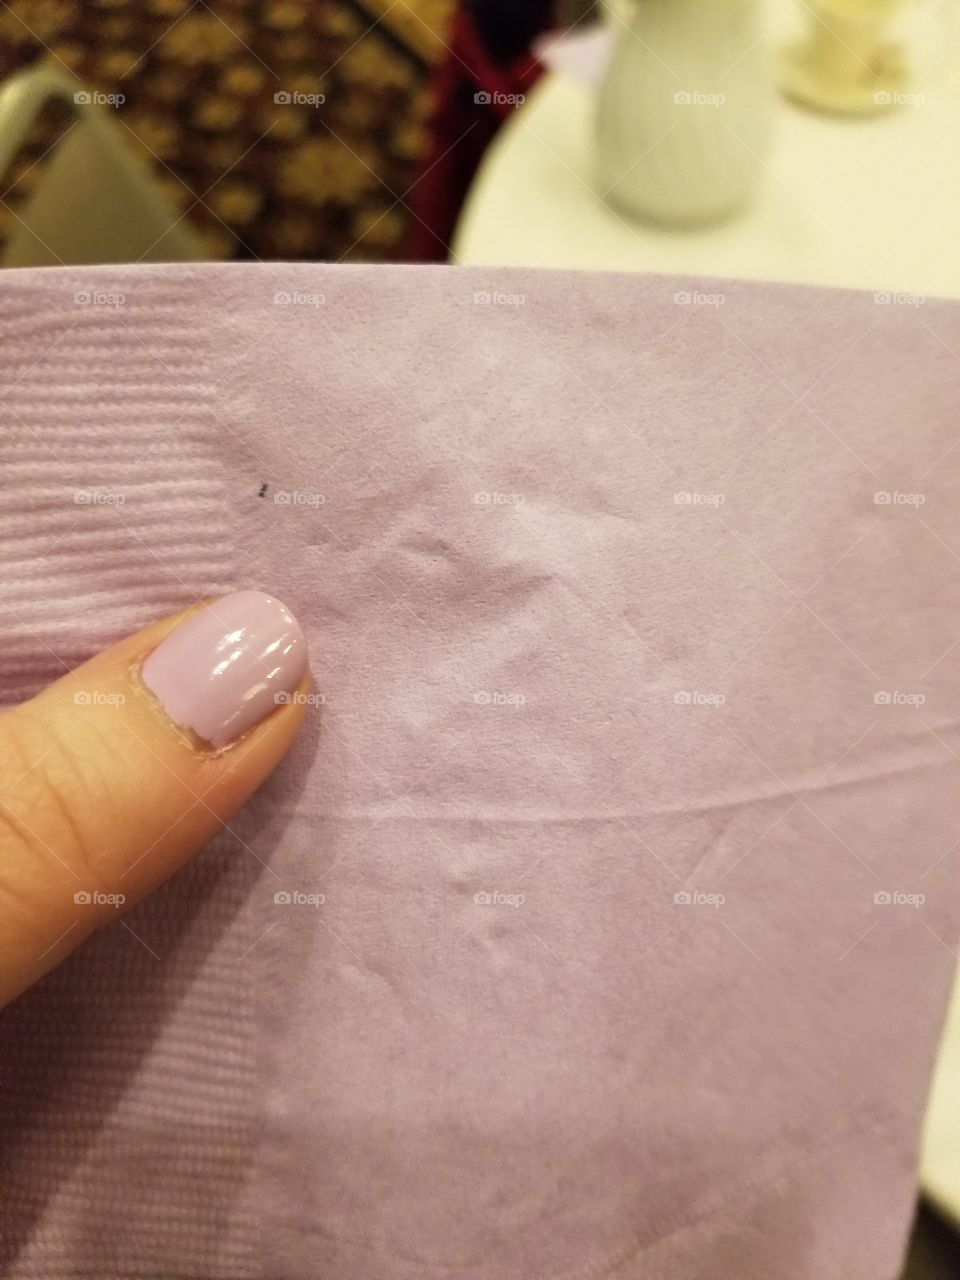 nail color matches napkin